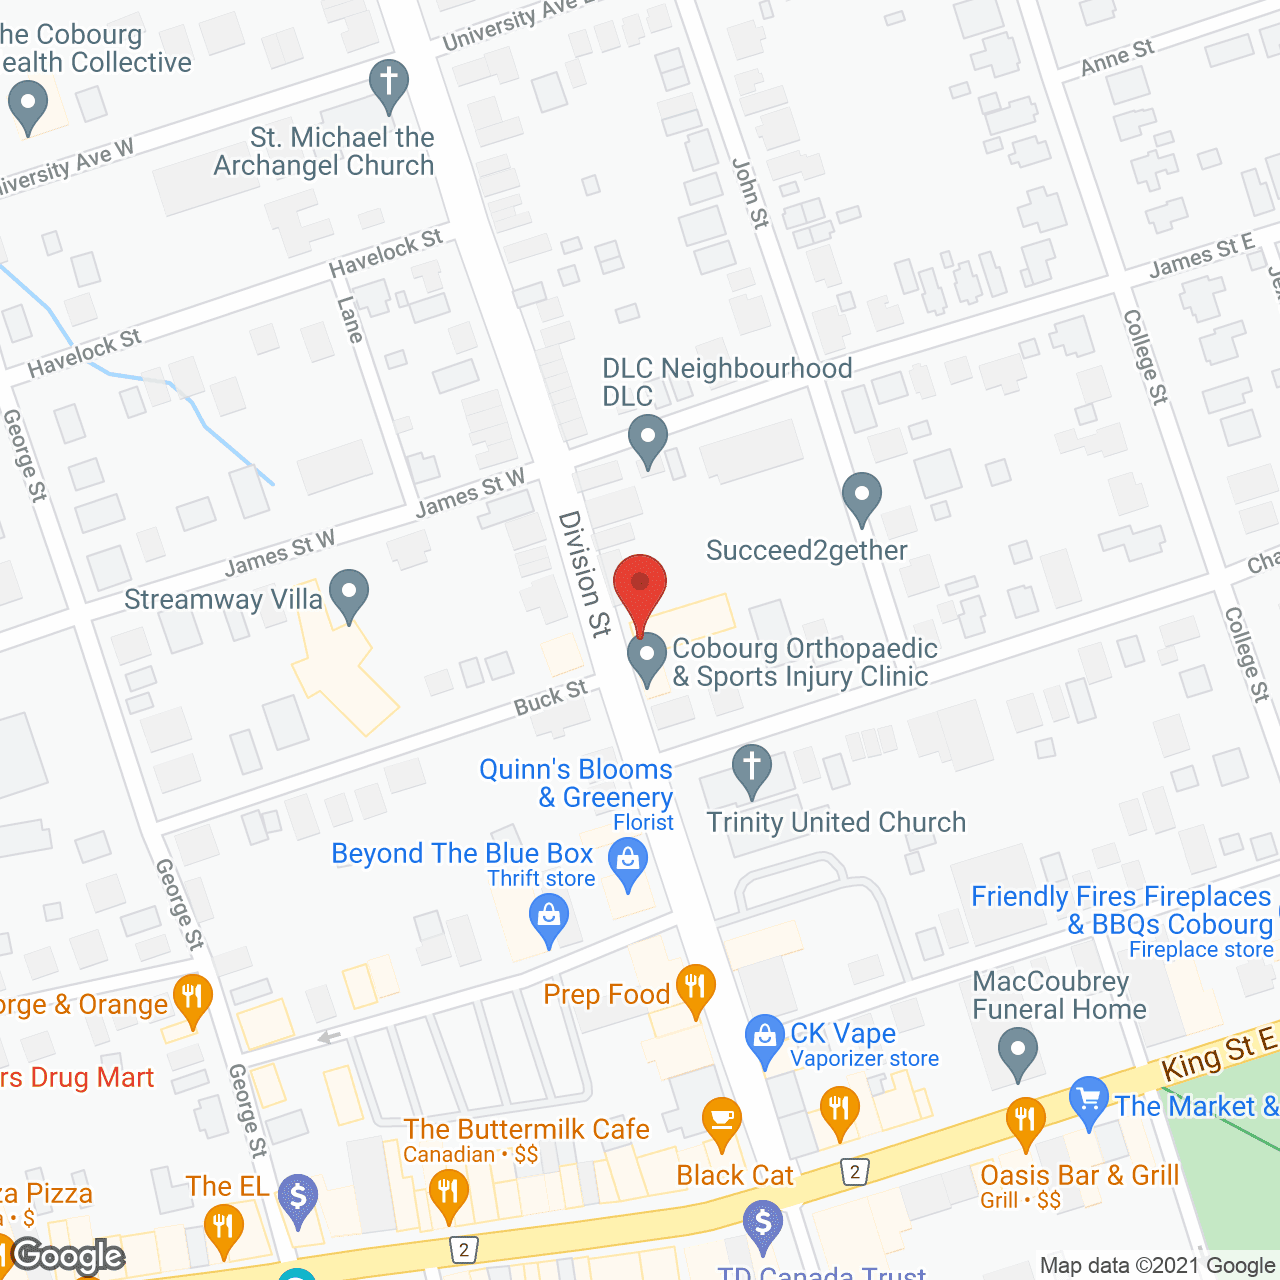 Cobourg Retirement Residence in google map